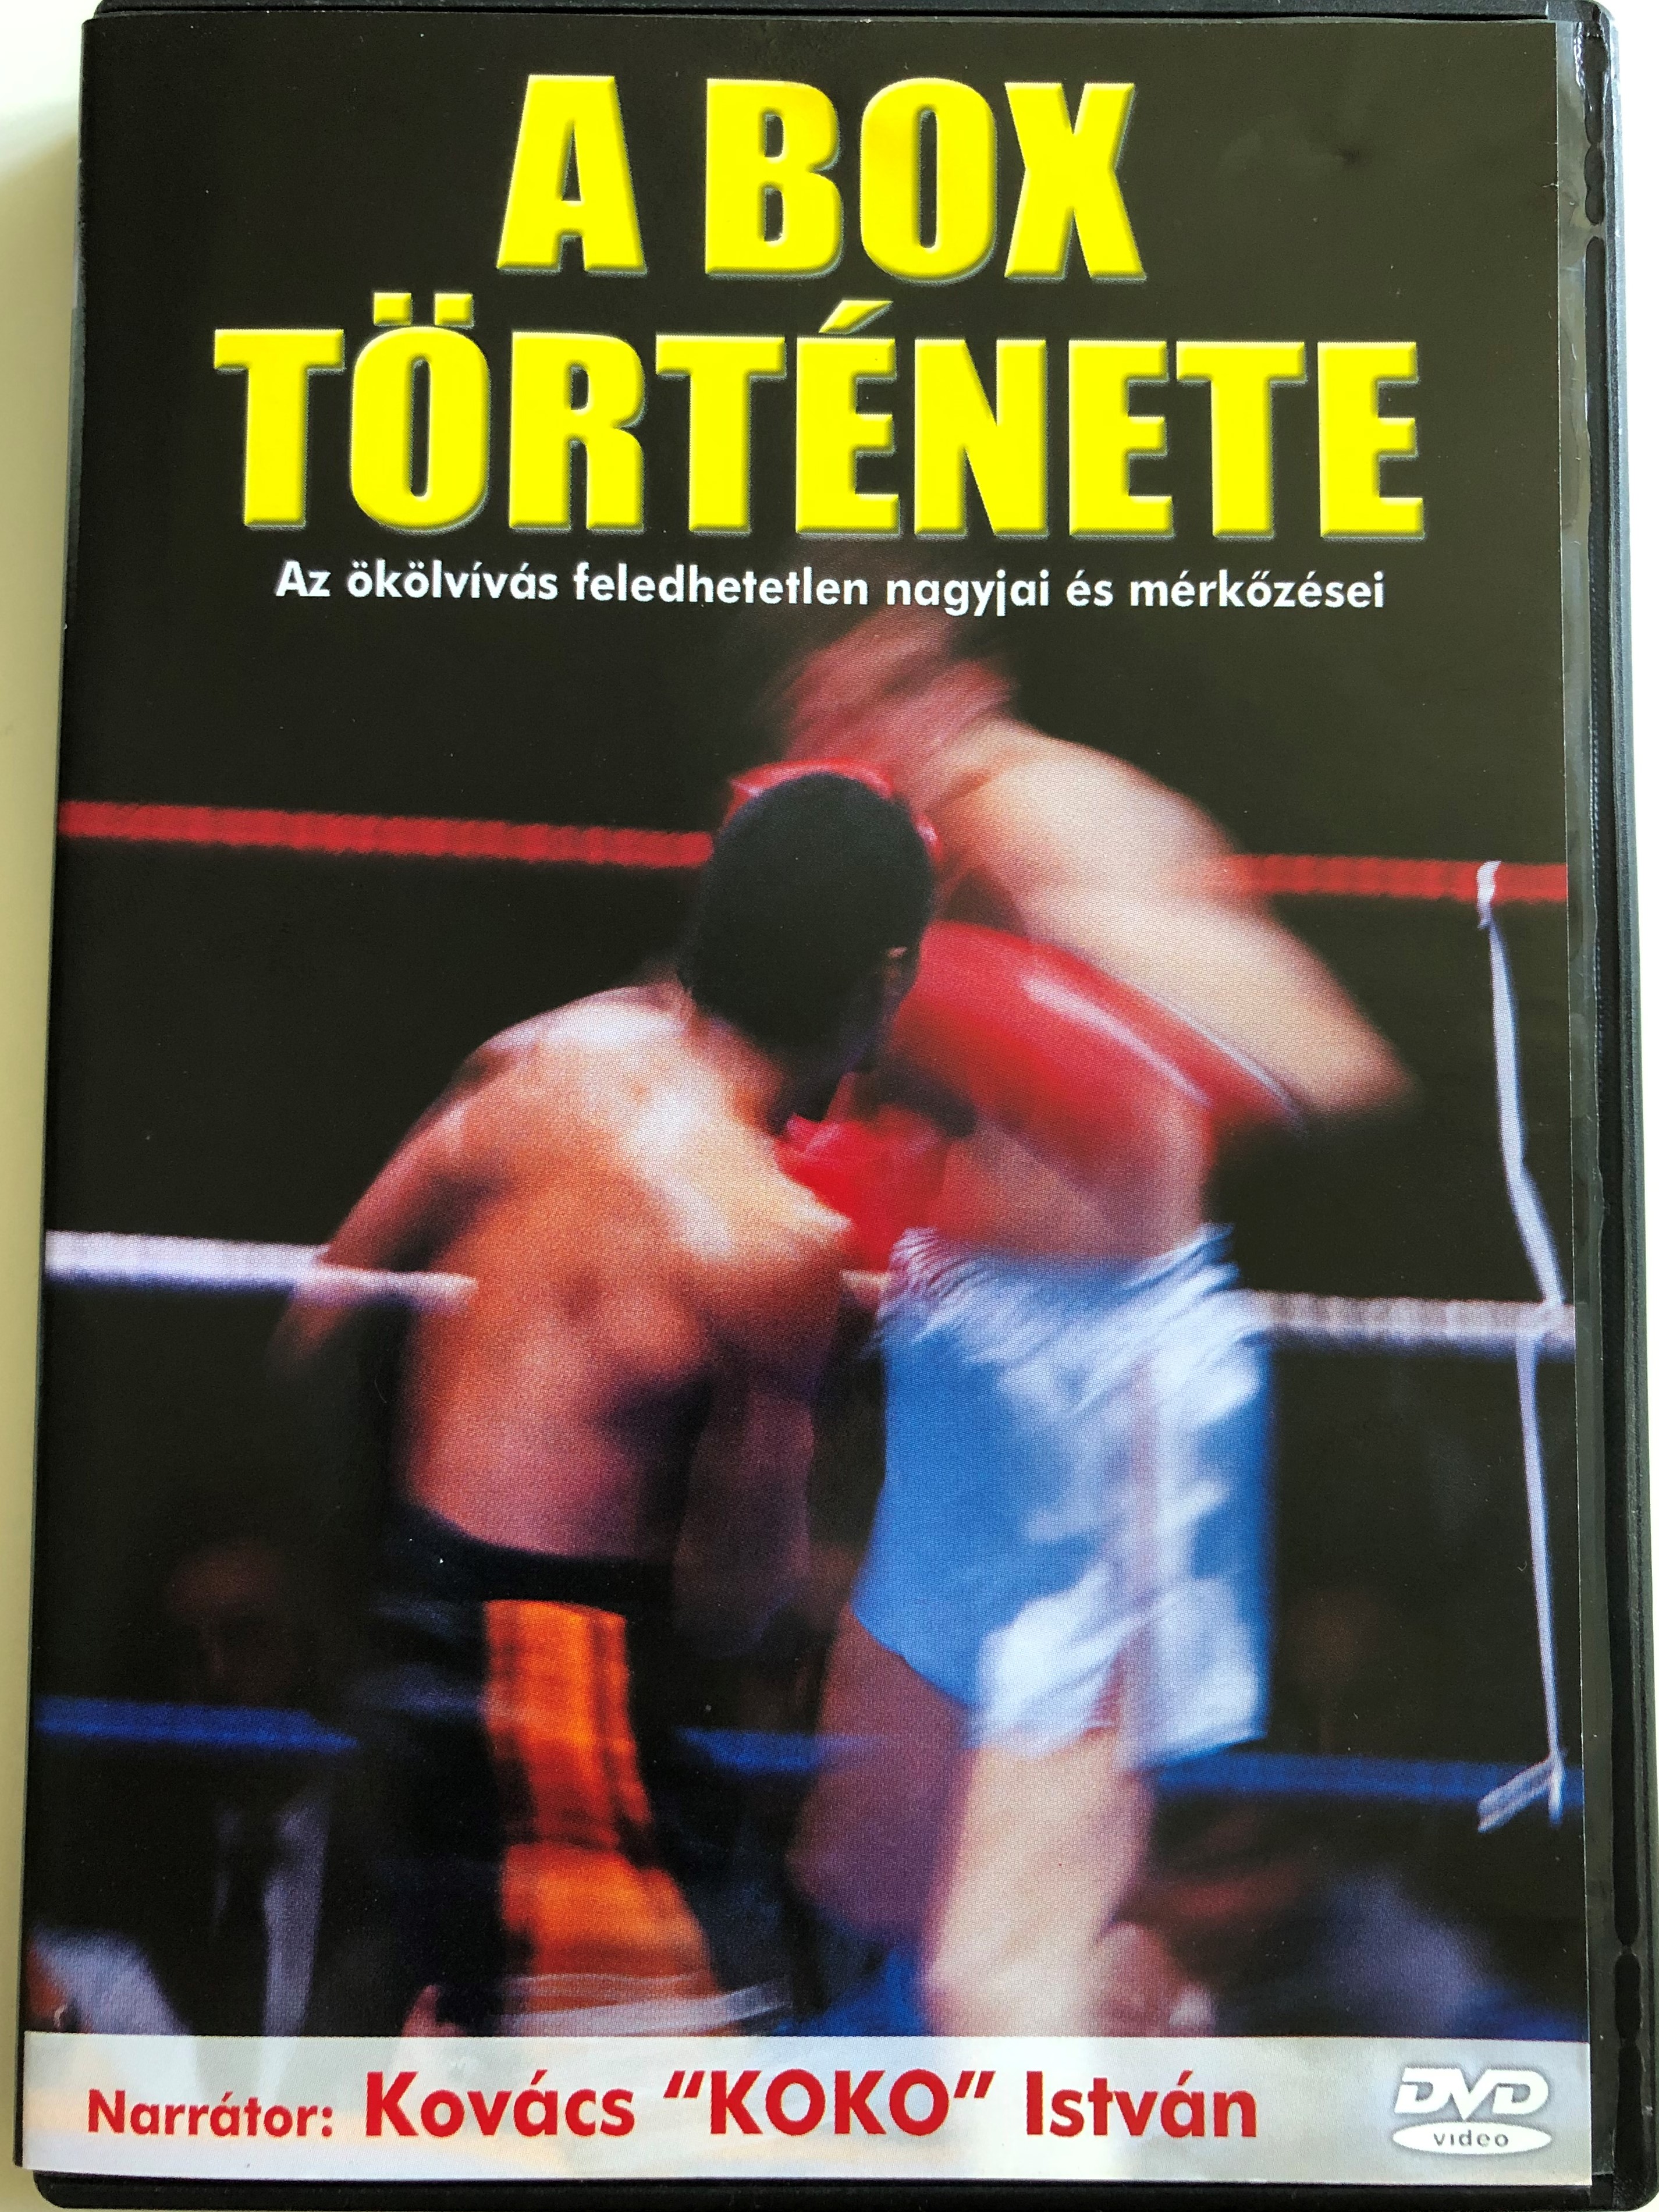 a-box-t-rt-nete-dvd-the-history-of-boxing-narrated-by-kov-cs-koko-istv-n-az-k-lv-v-s-feledhetetlen-nagyjai-s-m-rk-z-sei-1-.jpg